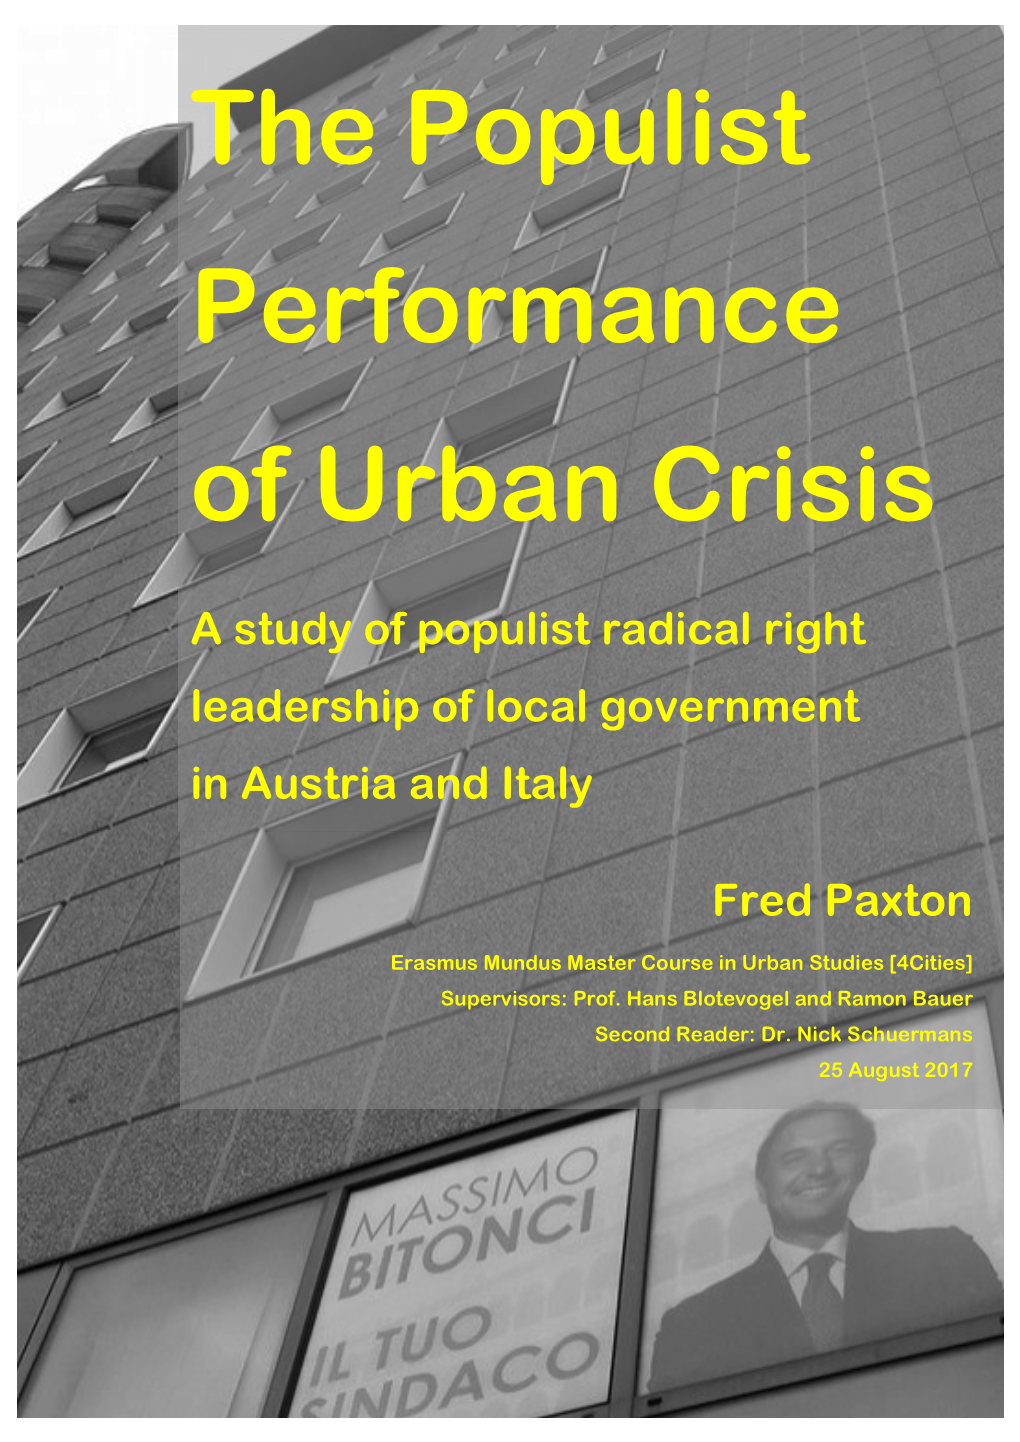 The Populist Performance of Urban Crisis